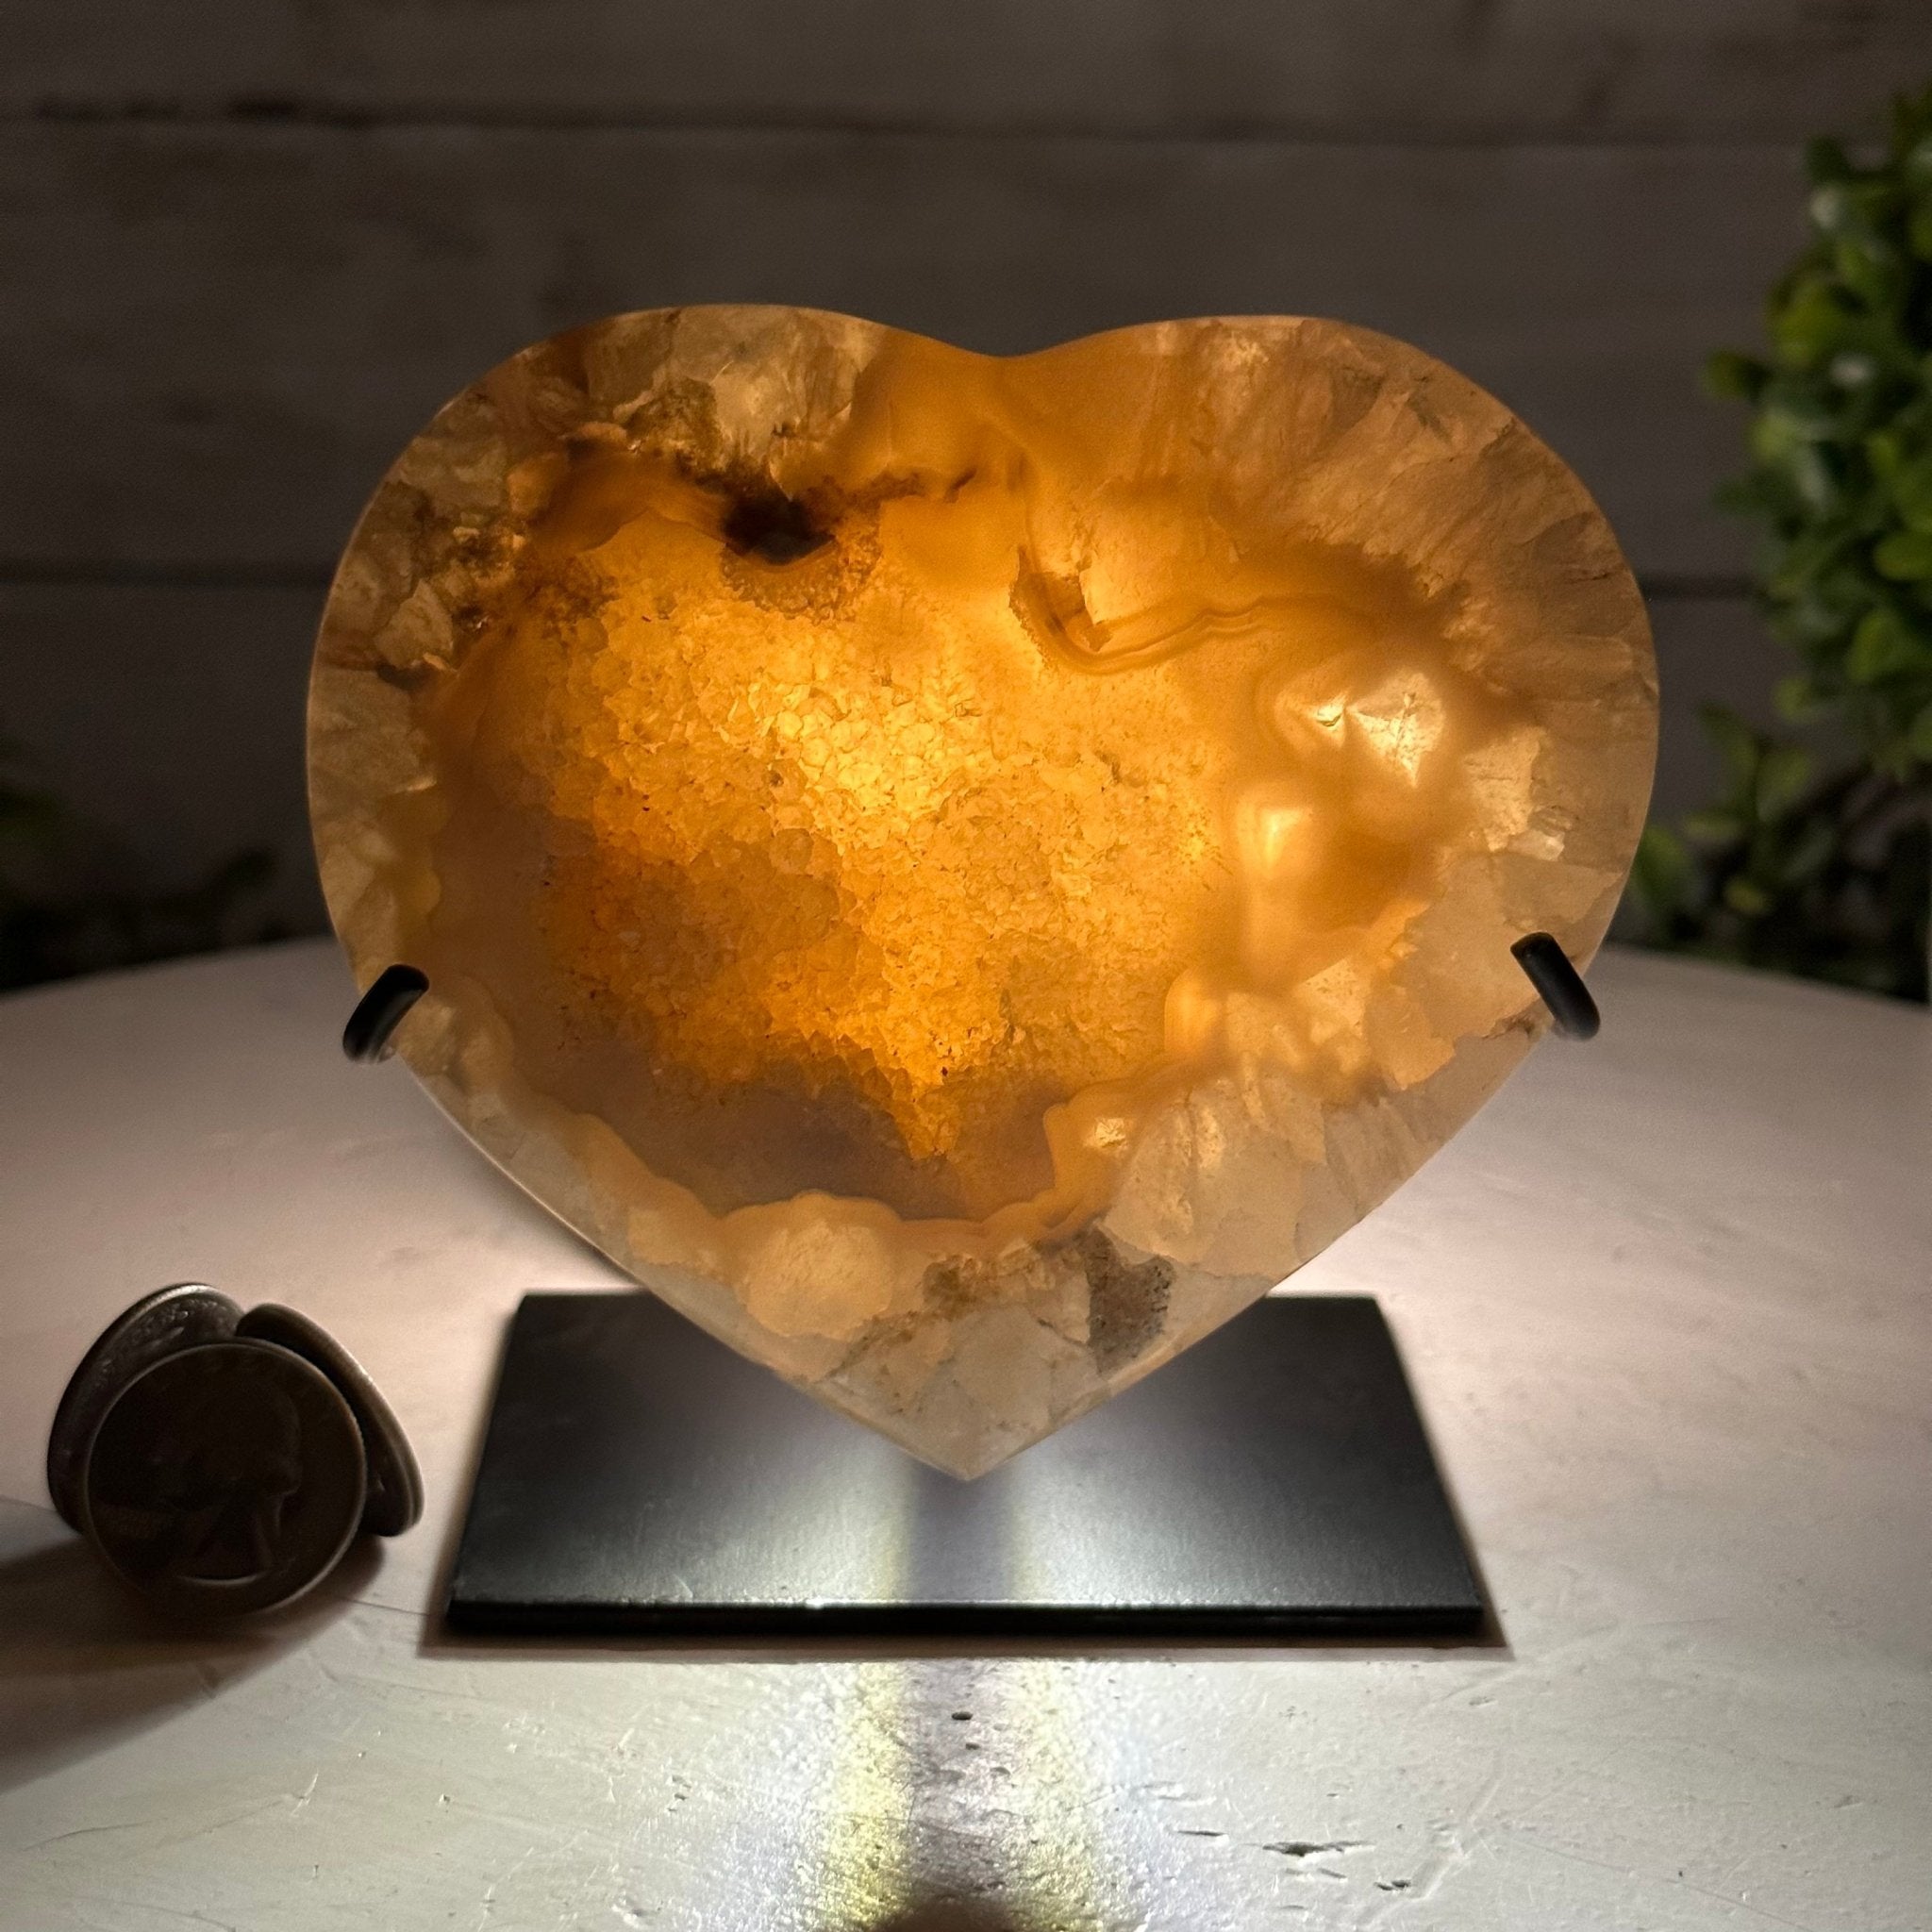 Polished Agate Heart Geode on a Metal Stand, 2 lbs & 4.5" Tall, Model #5468-0030 by Brazil Gems - Brazil GemsBrazil GemsPolished Agate Heart Geode on a Metal Stand, 2 lbs & 4.5" Tall, Model #5468-0030 by Brazil GemsHearts5468-0030